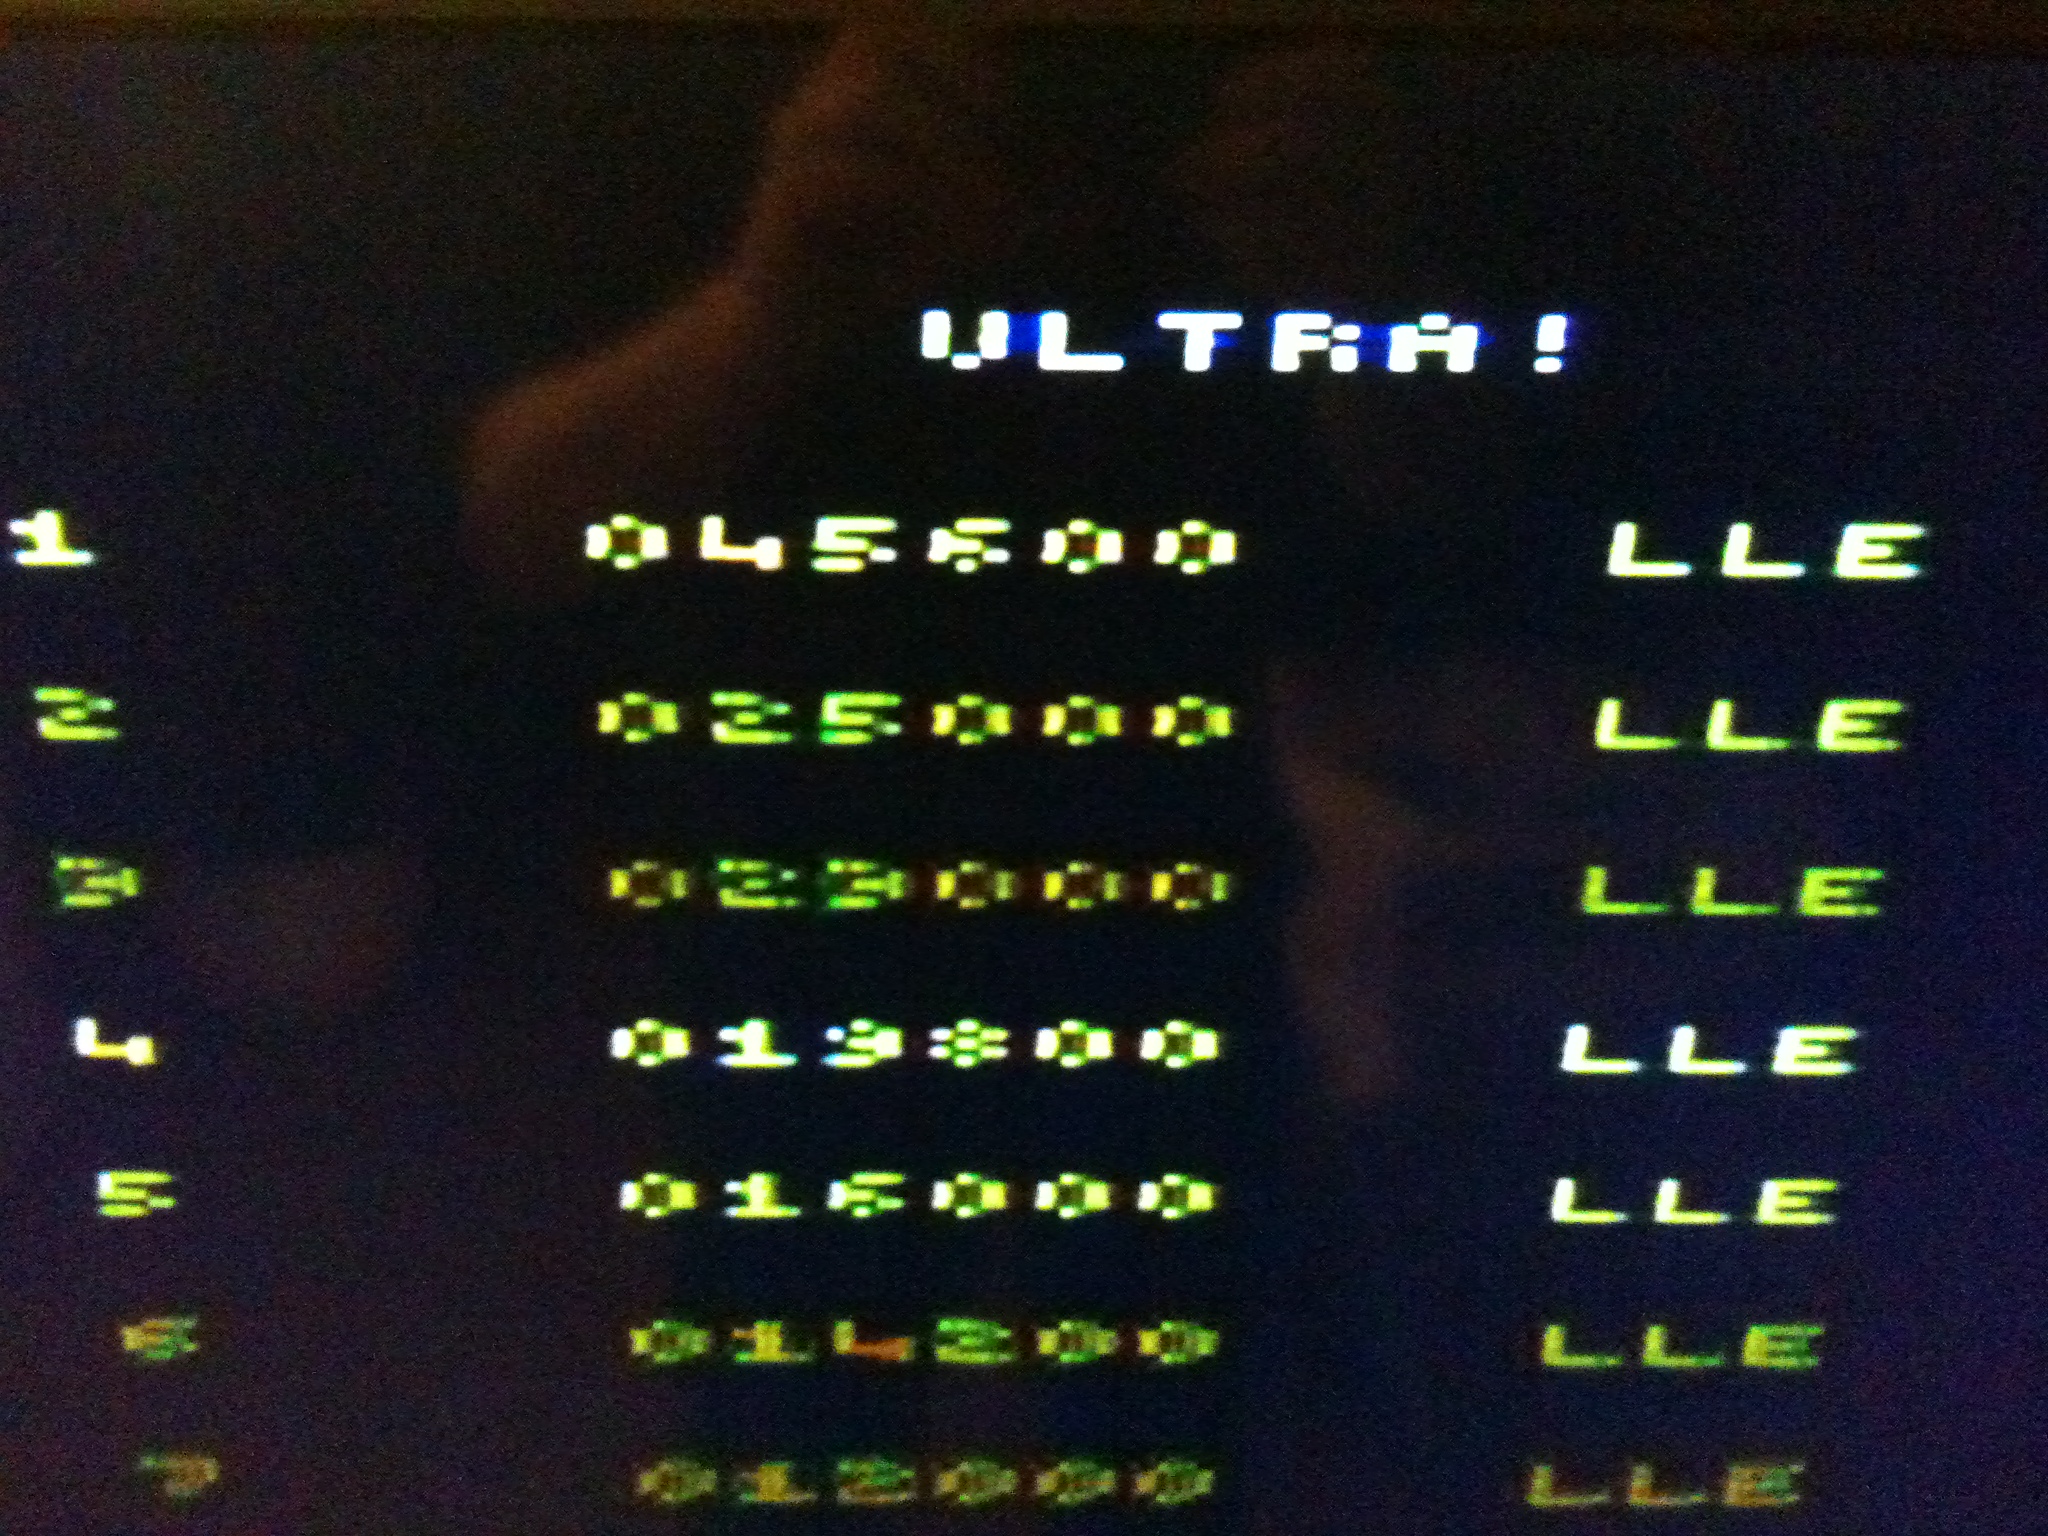 Chetiry: Ultra 45,600 points